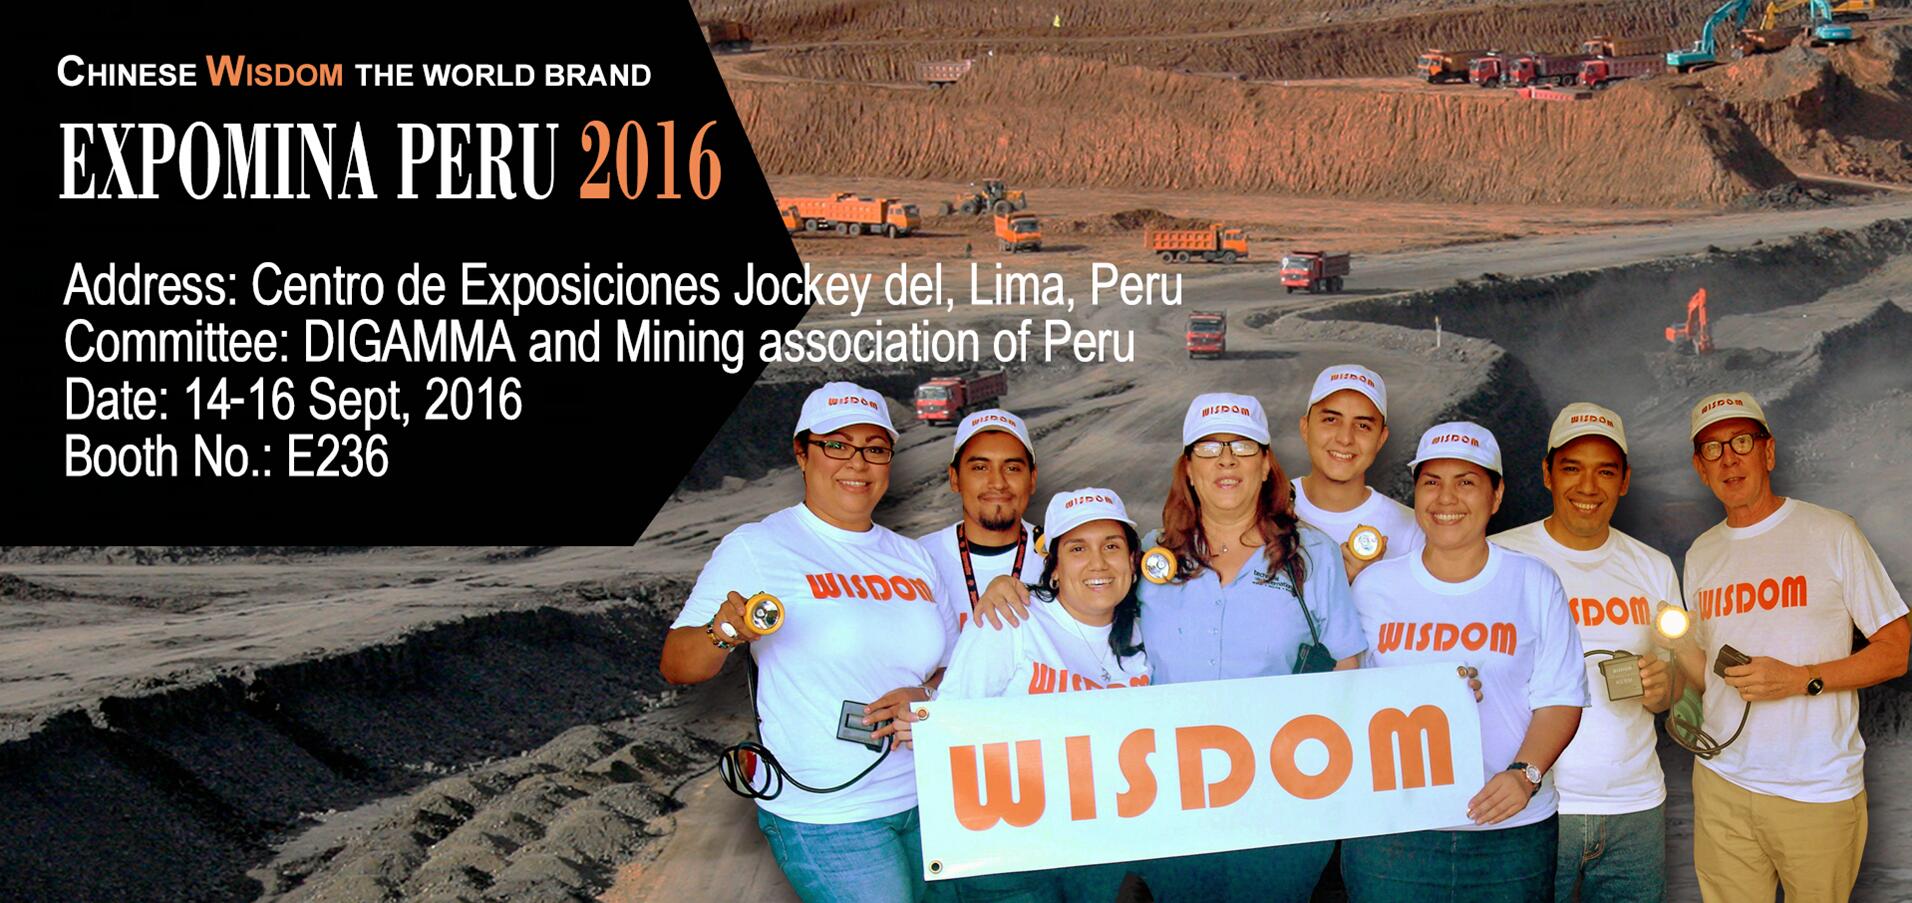 WISDOM will attend EXPOMINA PERU 2016